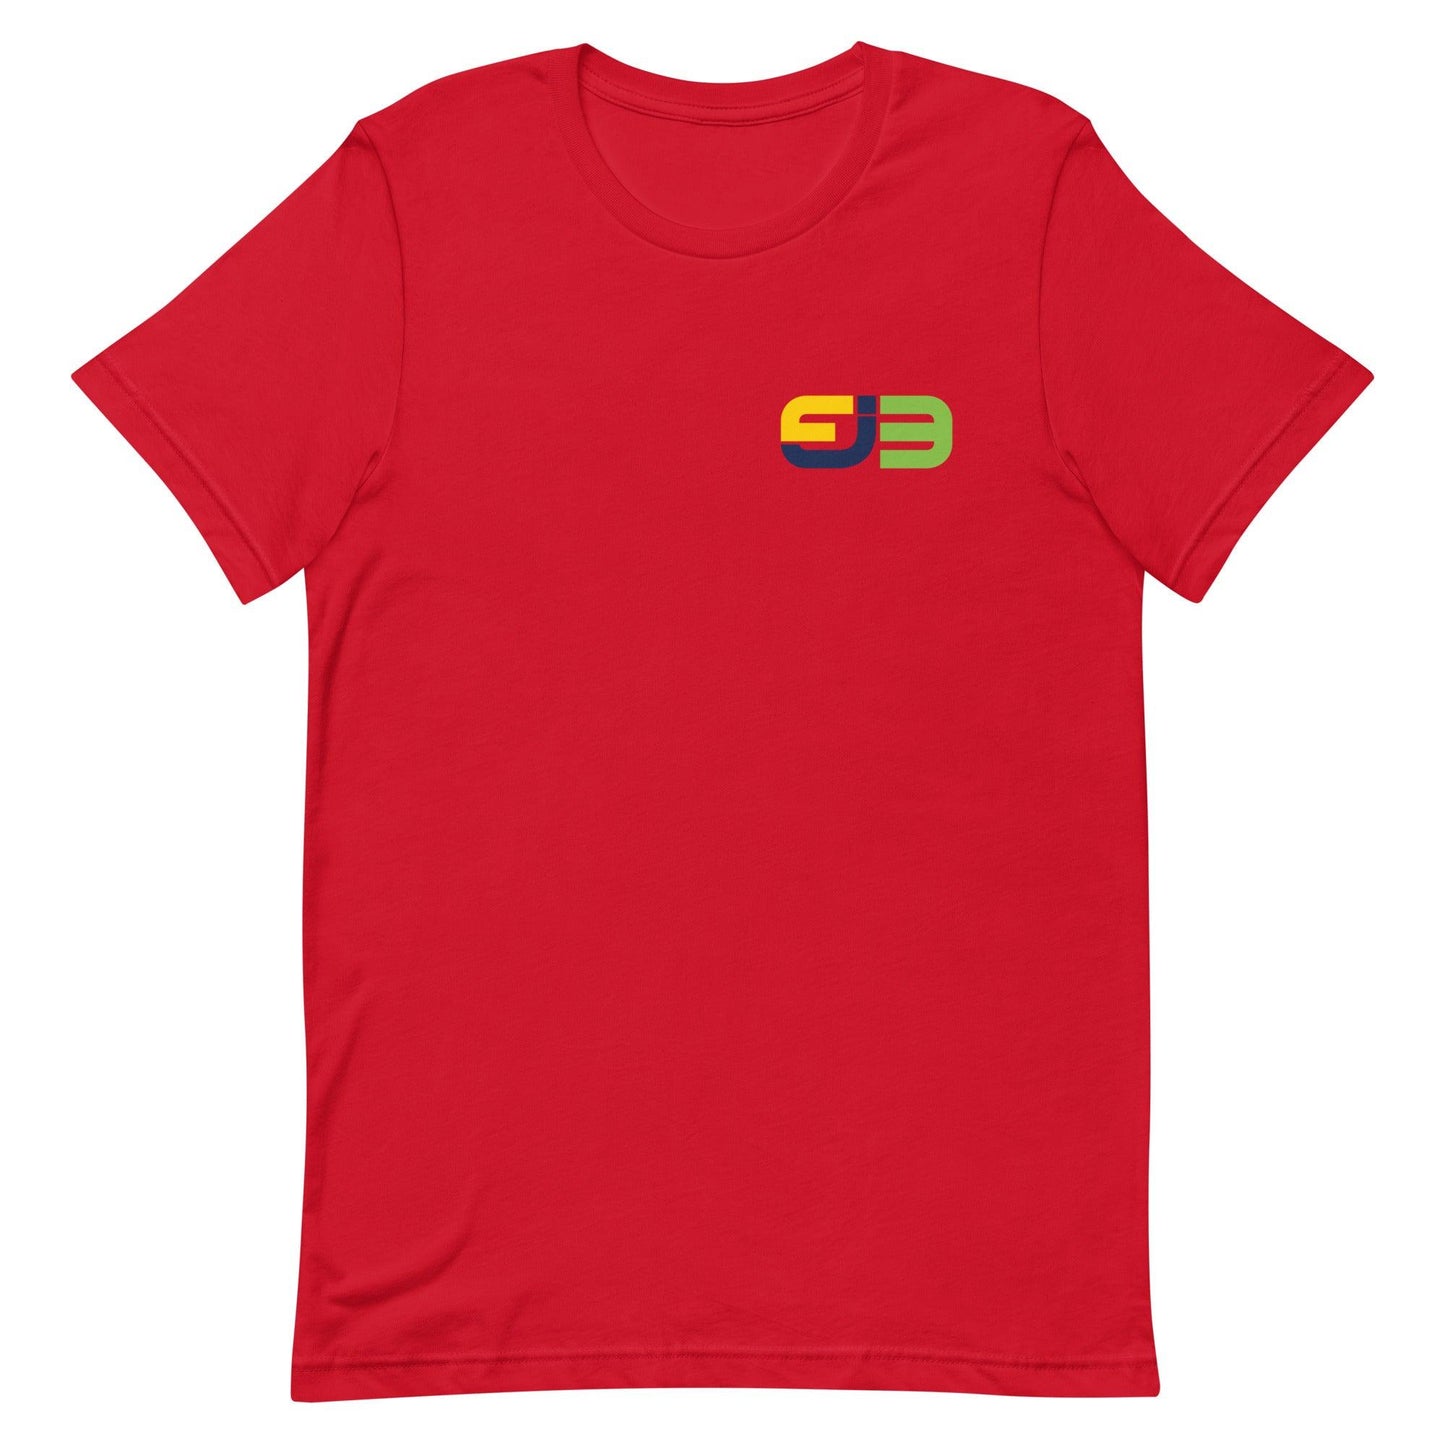 Eric Jones "Essential" t-shirt - Fan Arch